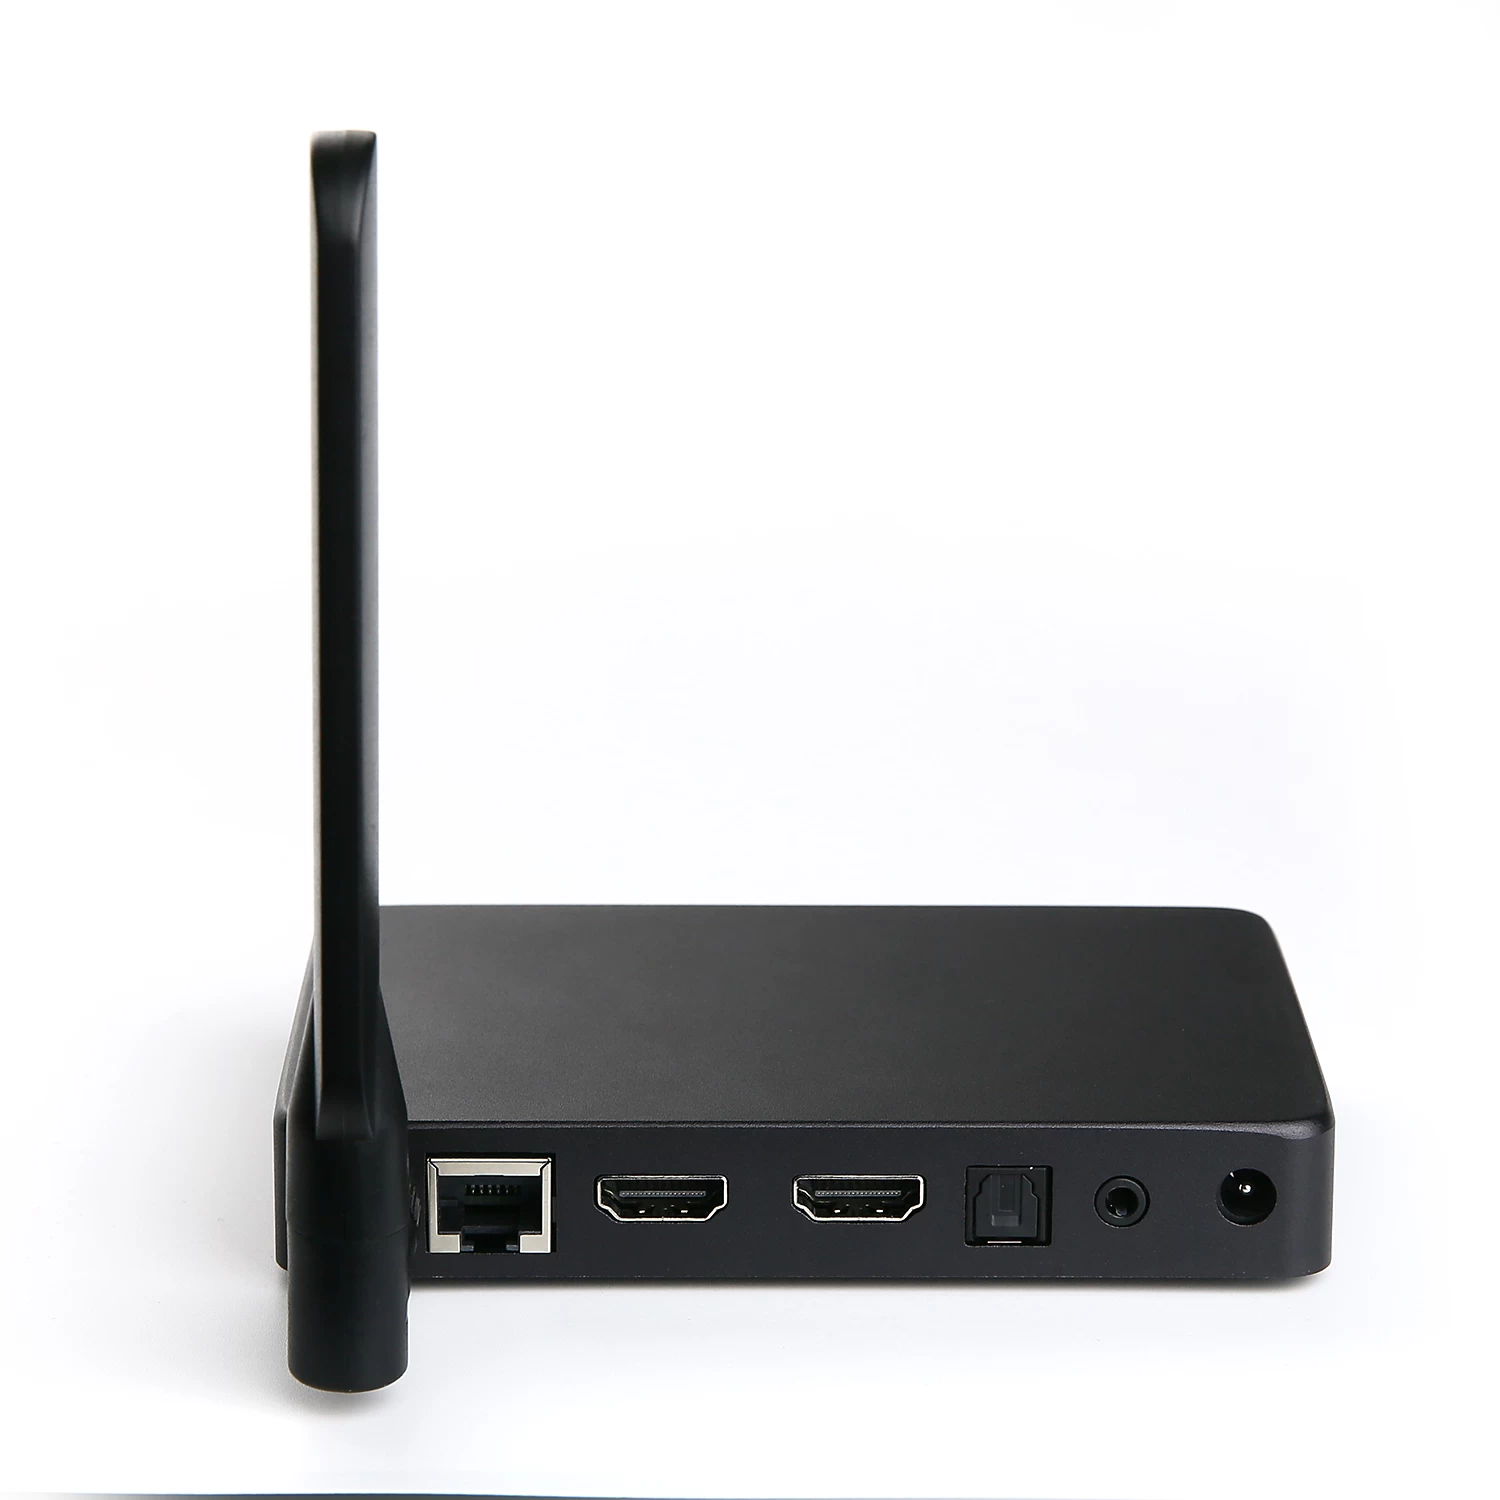 Realtek RTD1295 Quad-Core ARM Cortex-A53 64-bit @2GHz Best Android TV Box HDMI iN Media Player Box